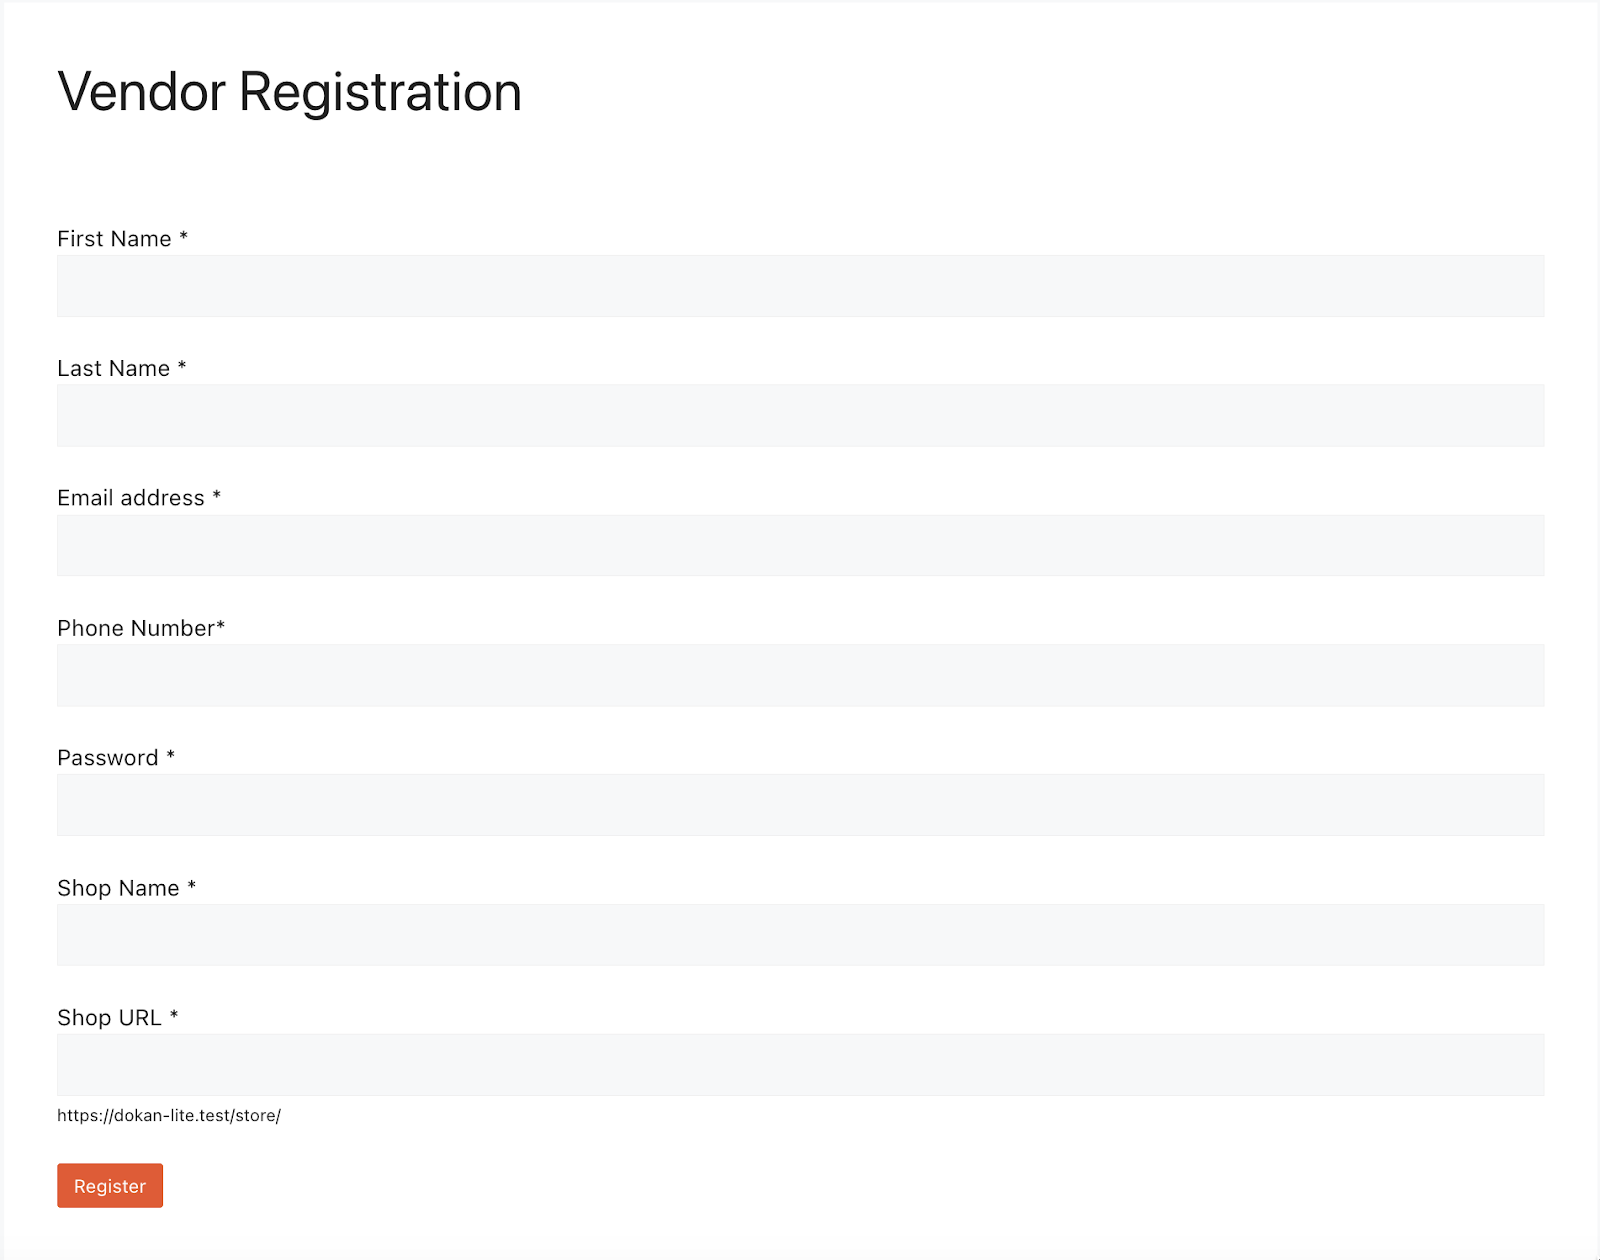 This is a screenshot of Dokan Vendor registration form